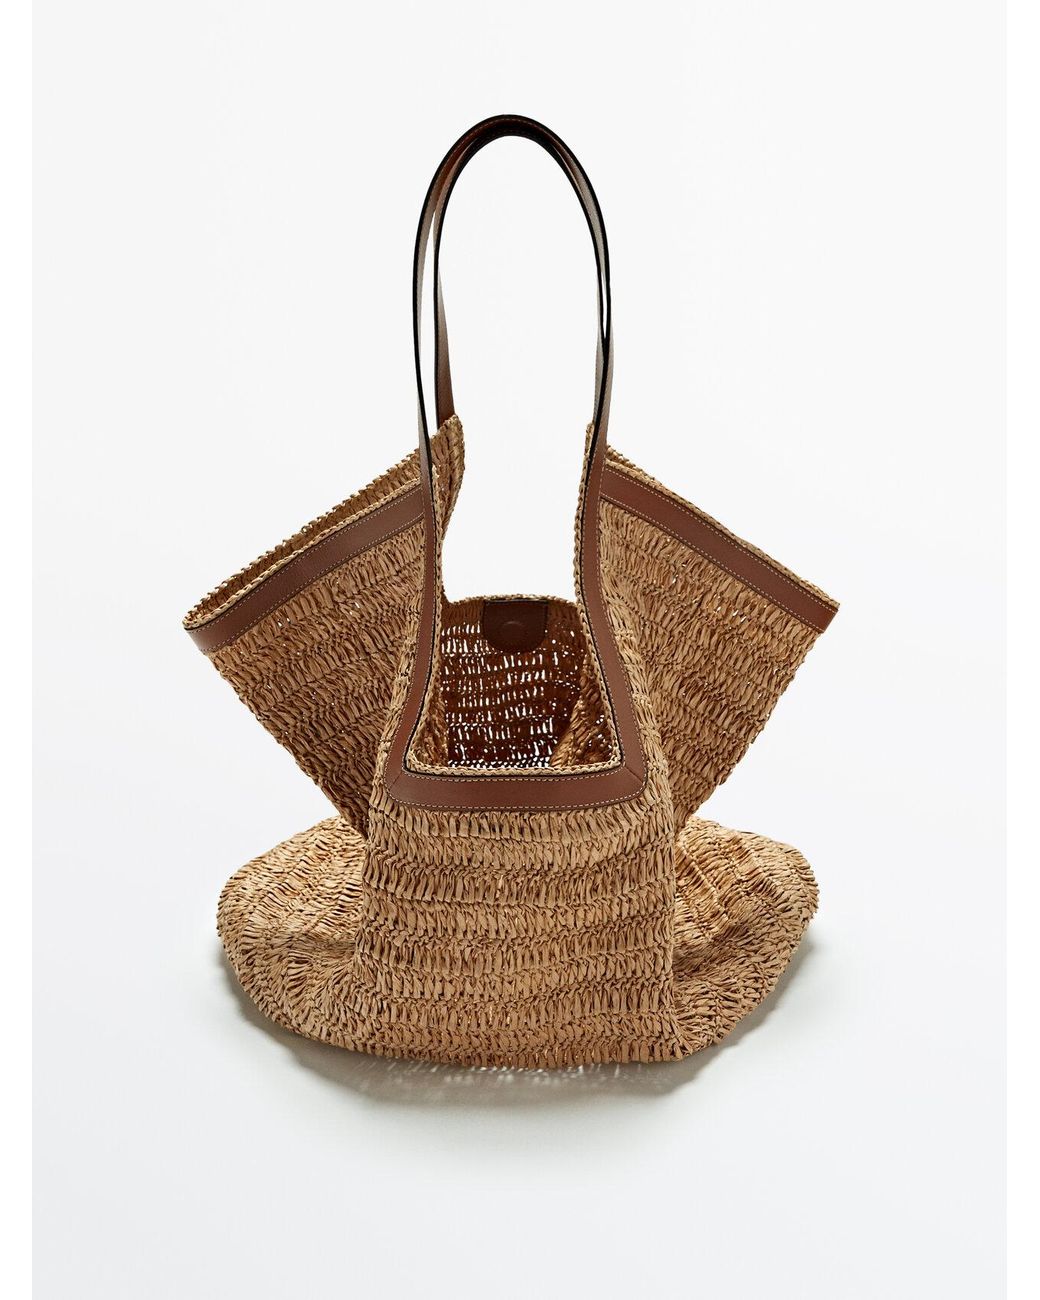 Yati Fashion Massimo Dutti New with Tags X Jane Birkin Raffia Contrast  Leather bags fancy  Amazonin Bags Wallets and Luggage